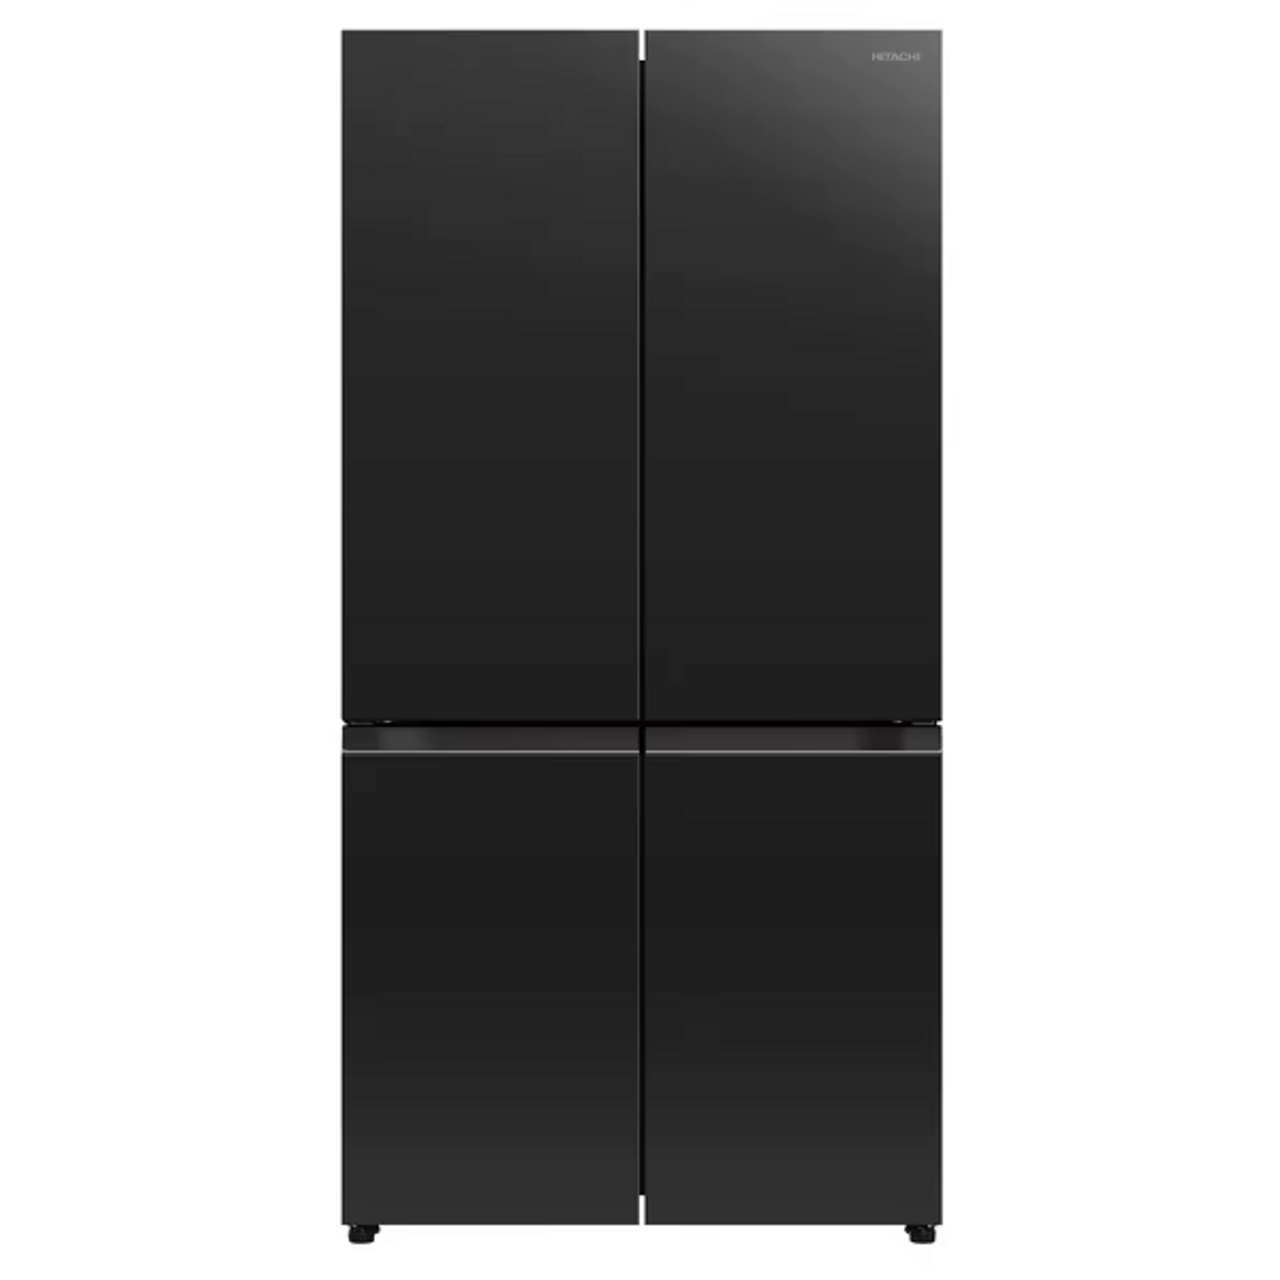 RWB640PT1GCK - 569L French Door Inverter Refrigerator - Glass Clear Black